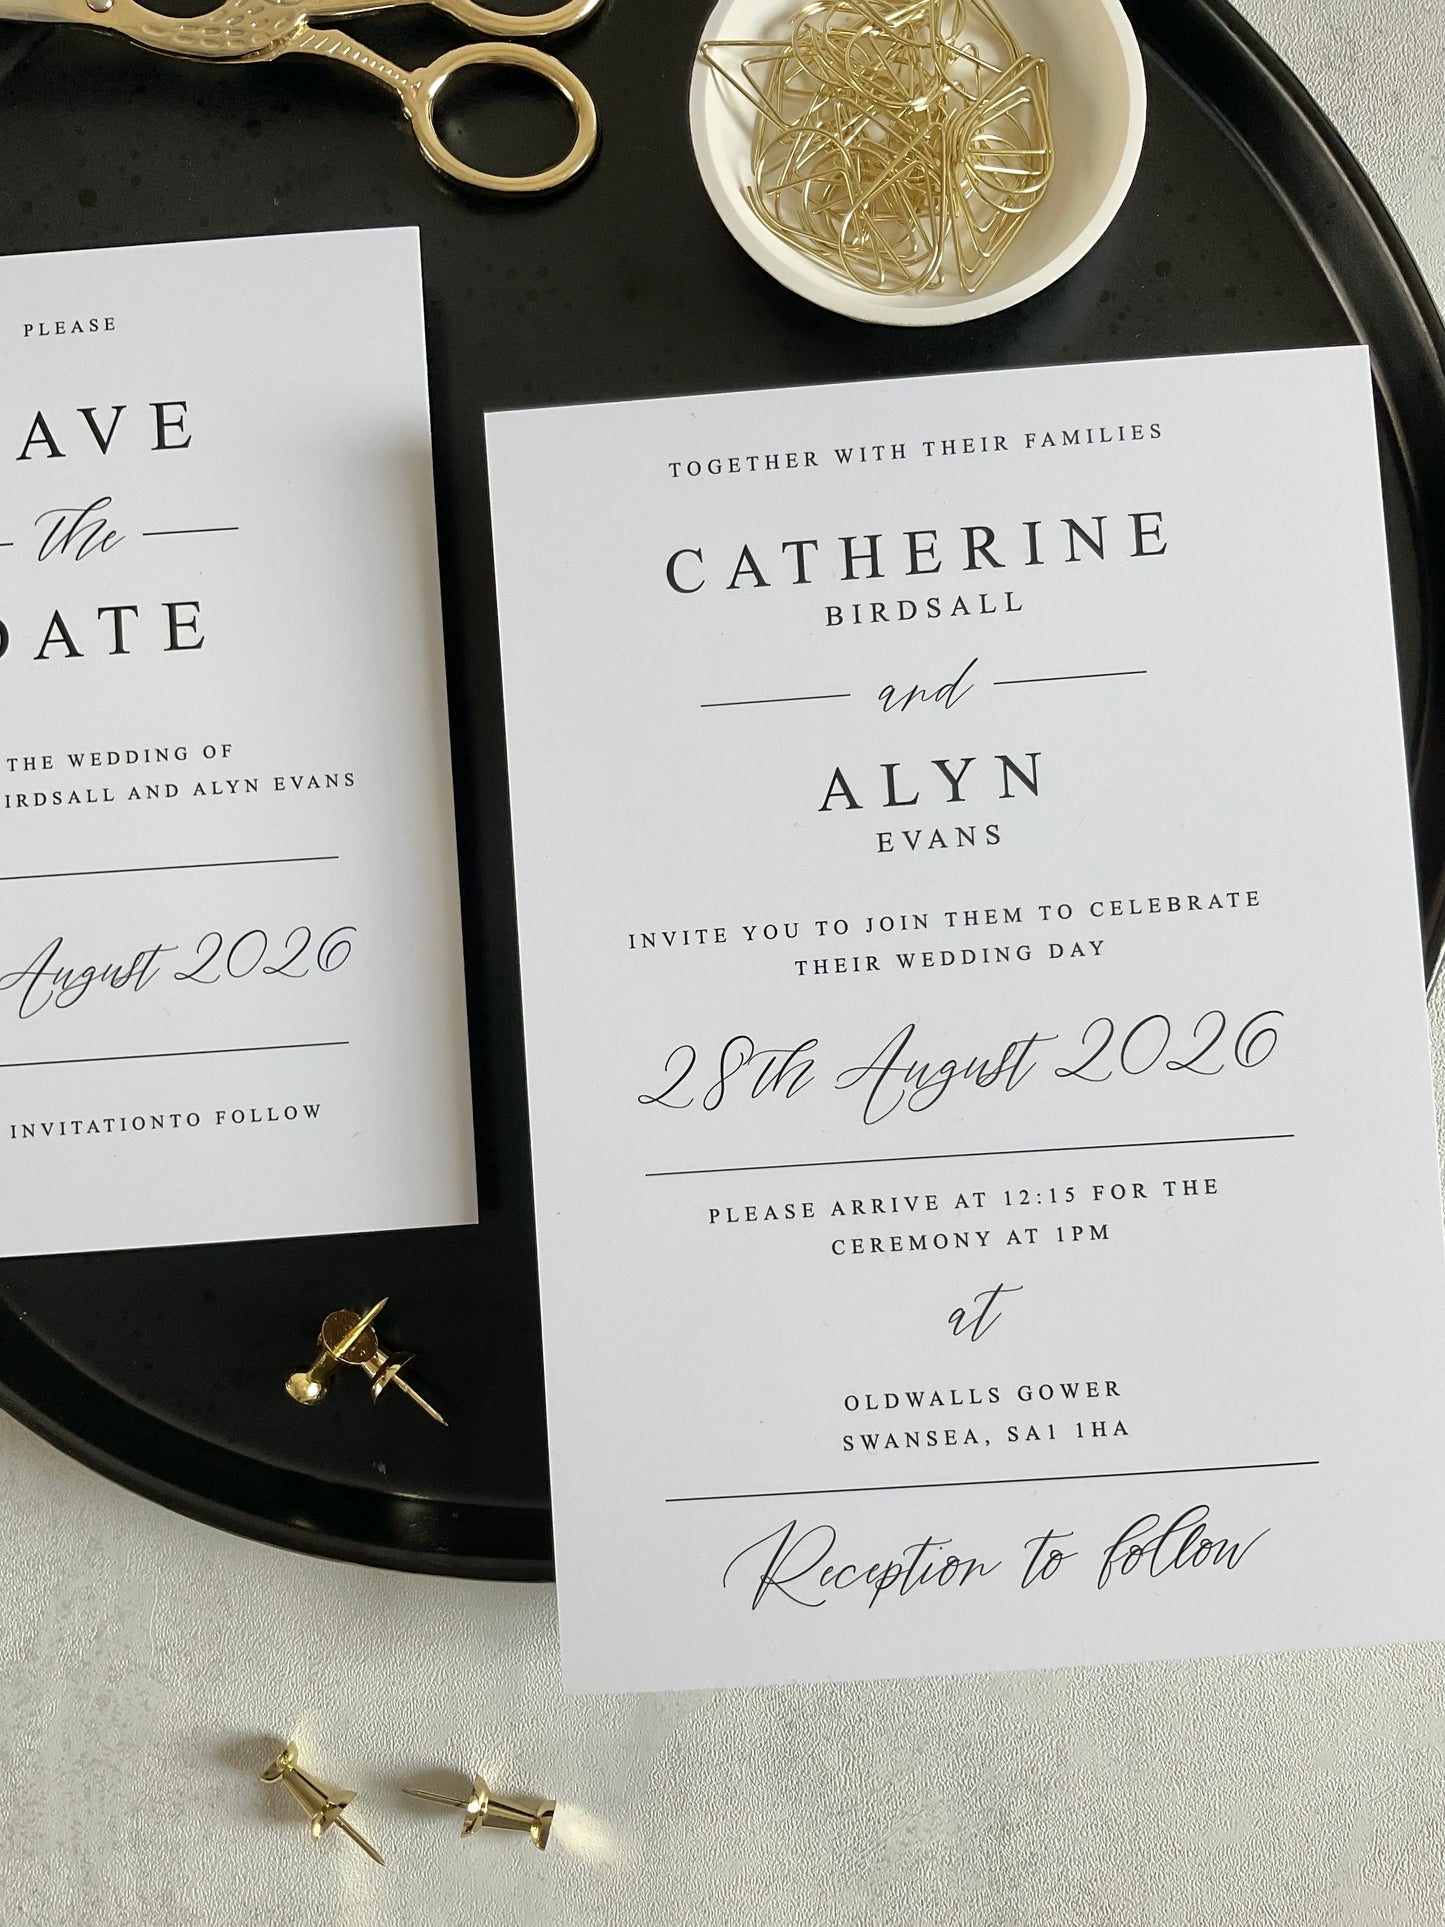 Catherine Day Invitation